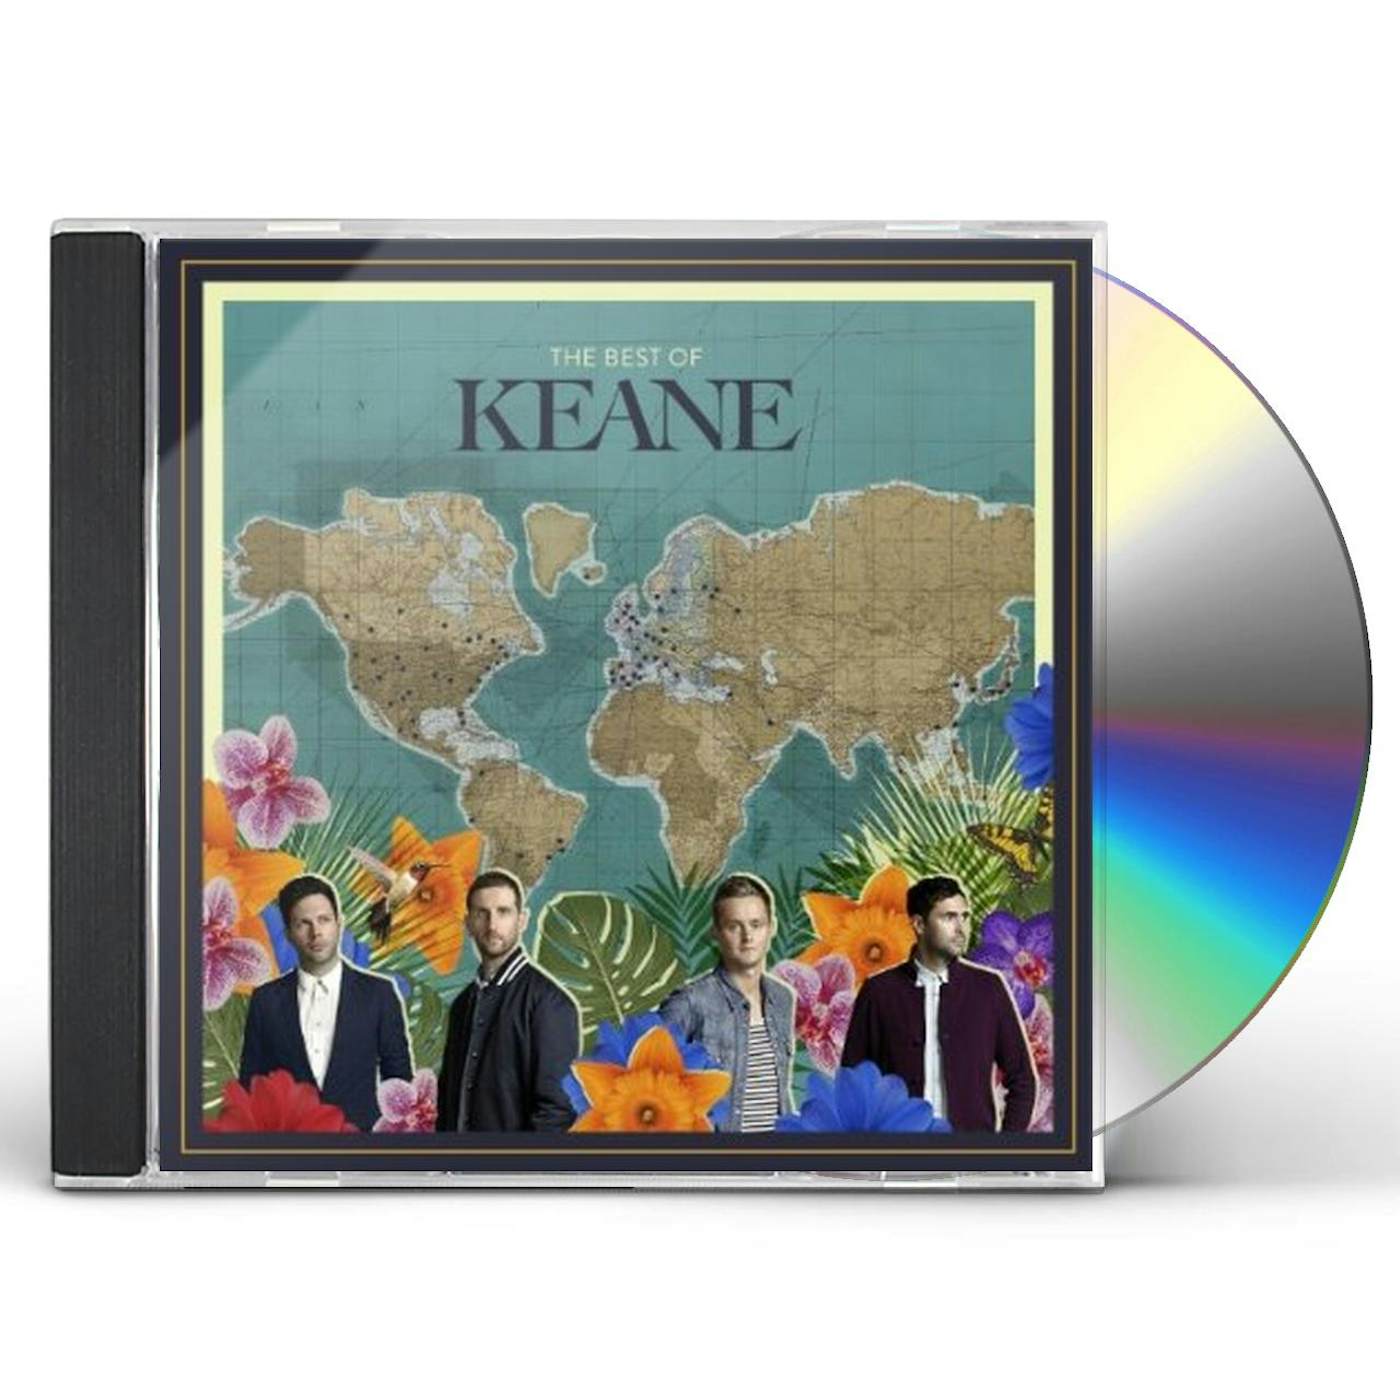 BEST OF KEANE CD